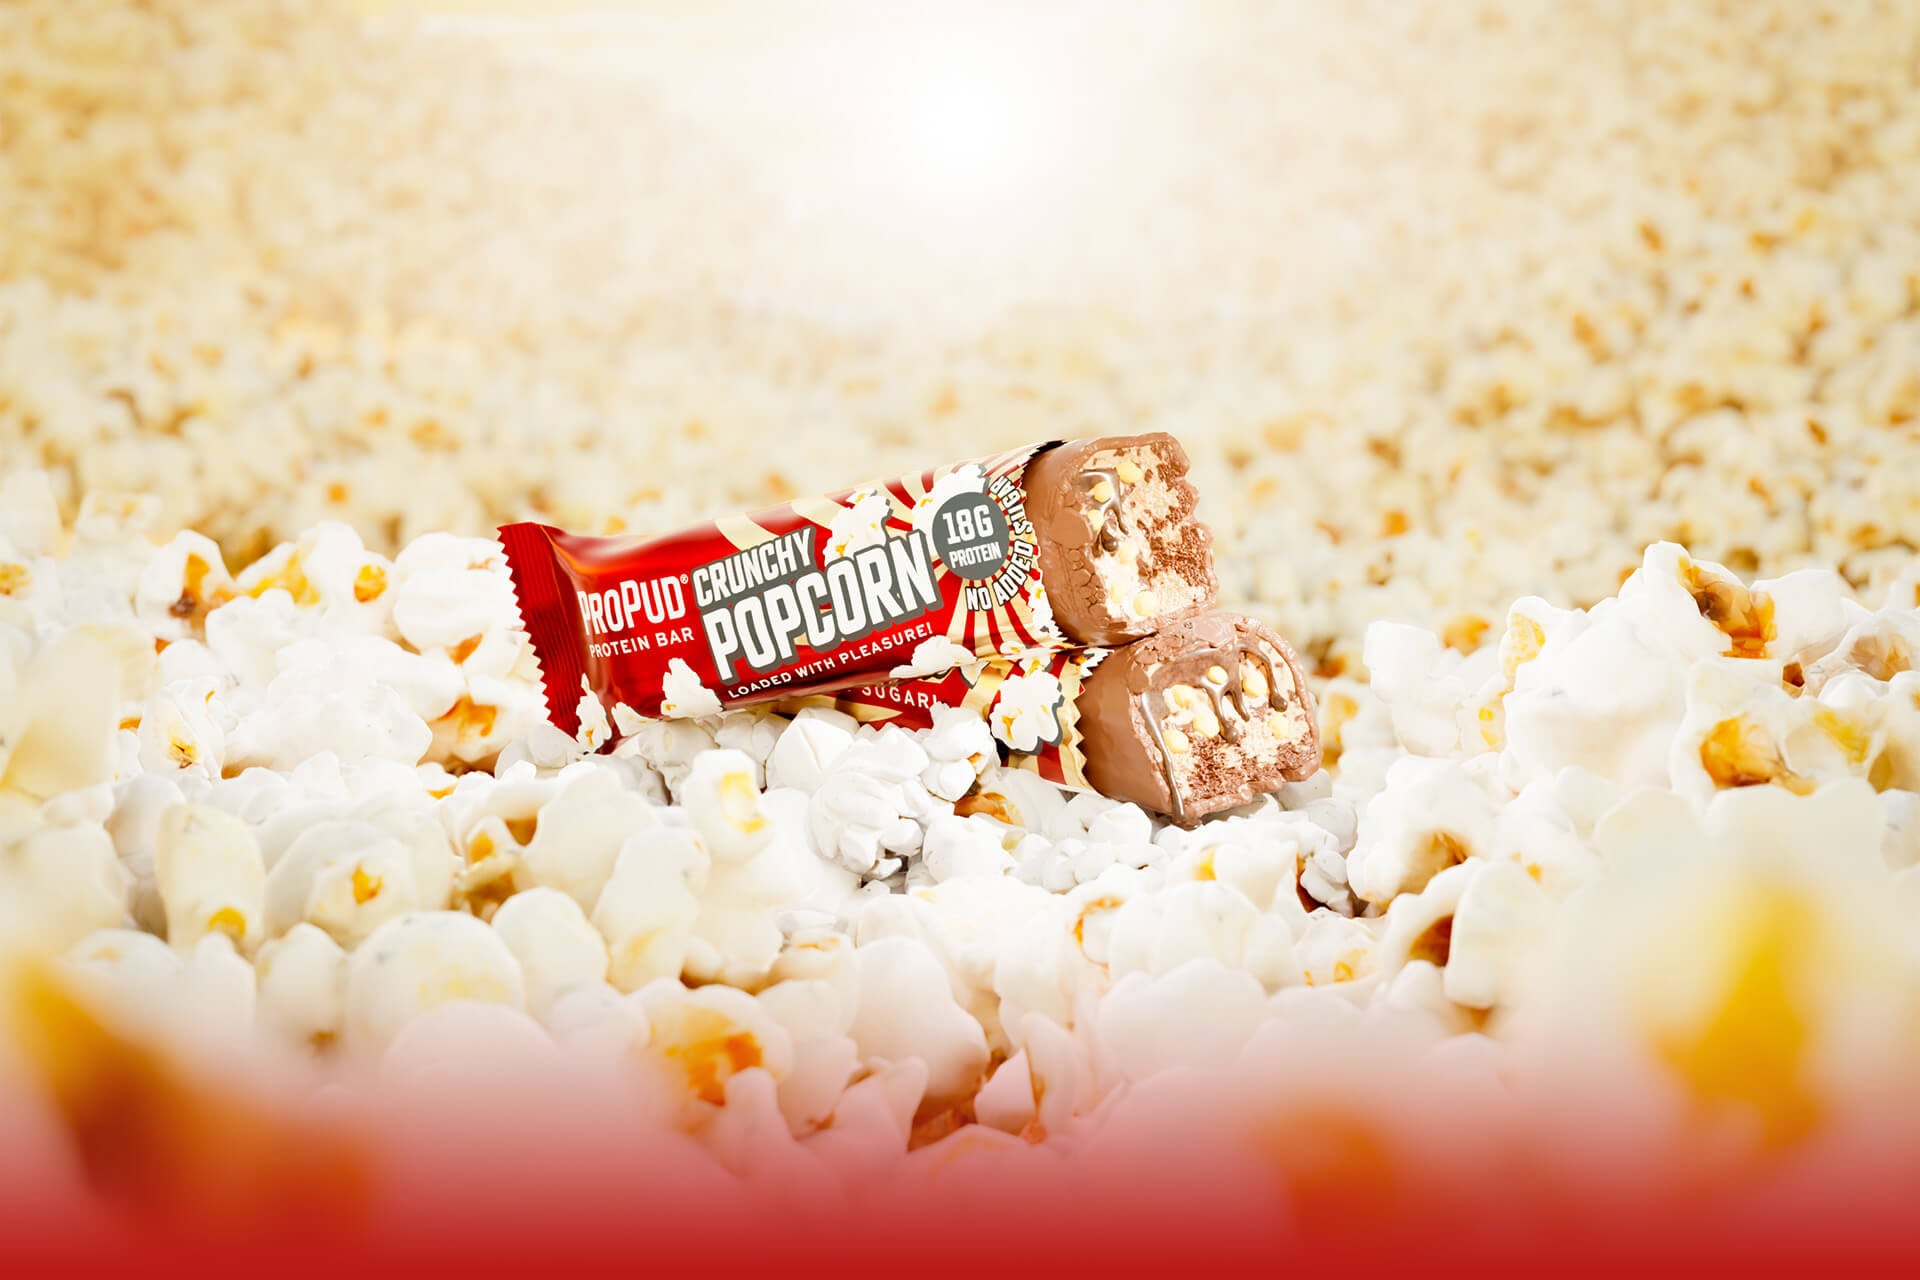 Propud Crunchy Popcorn Protein Bar